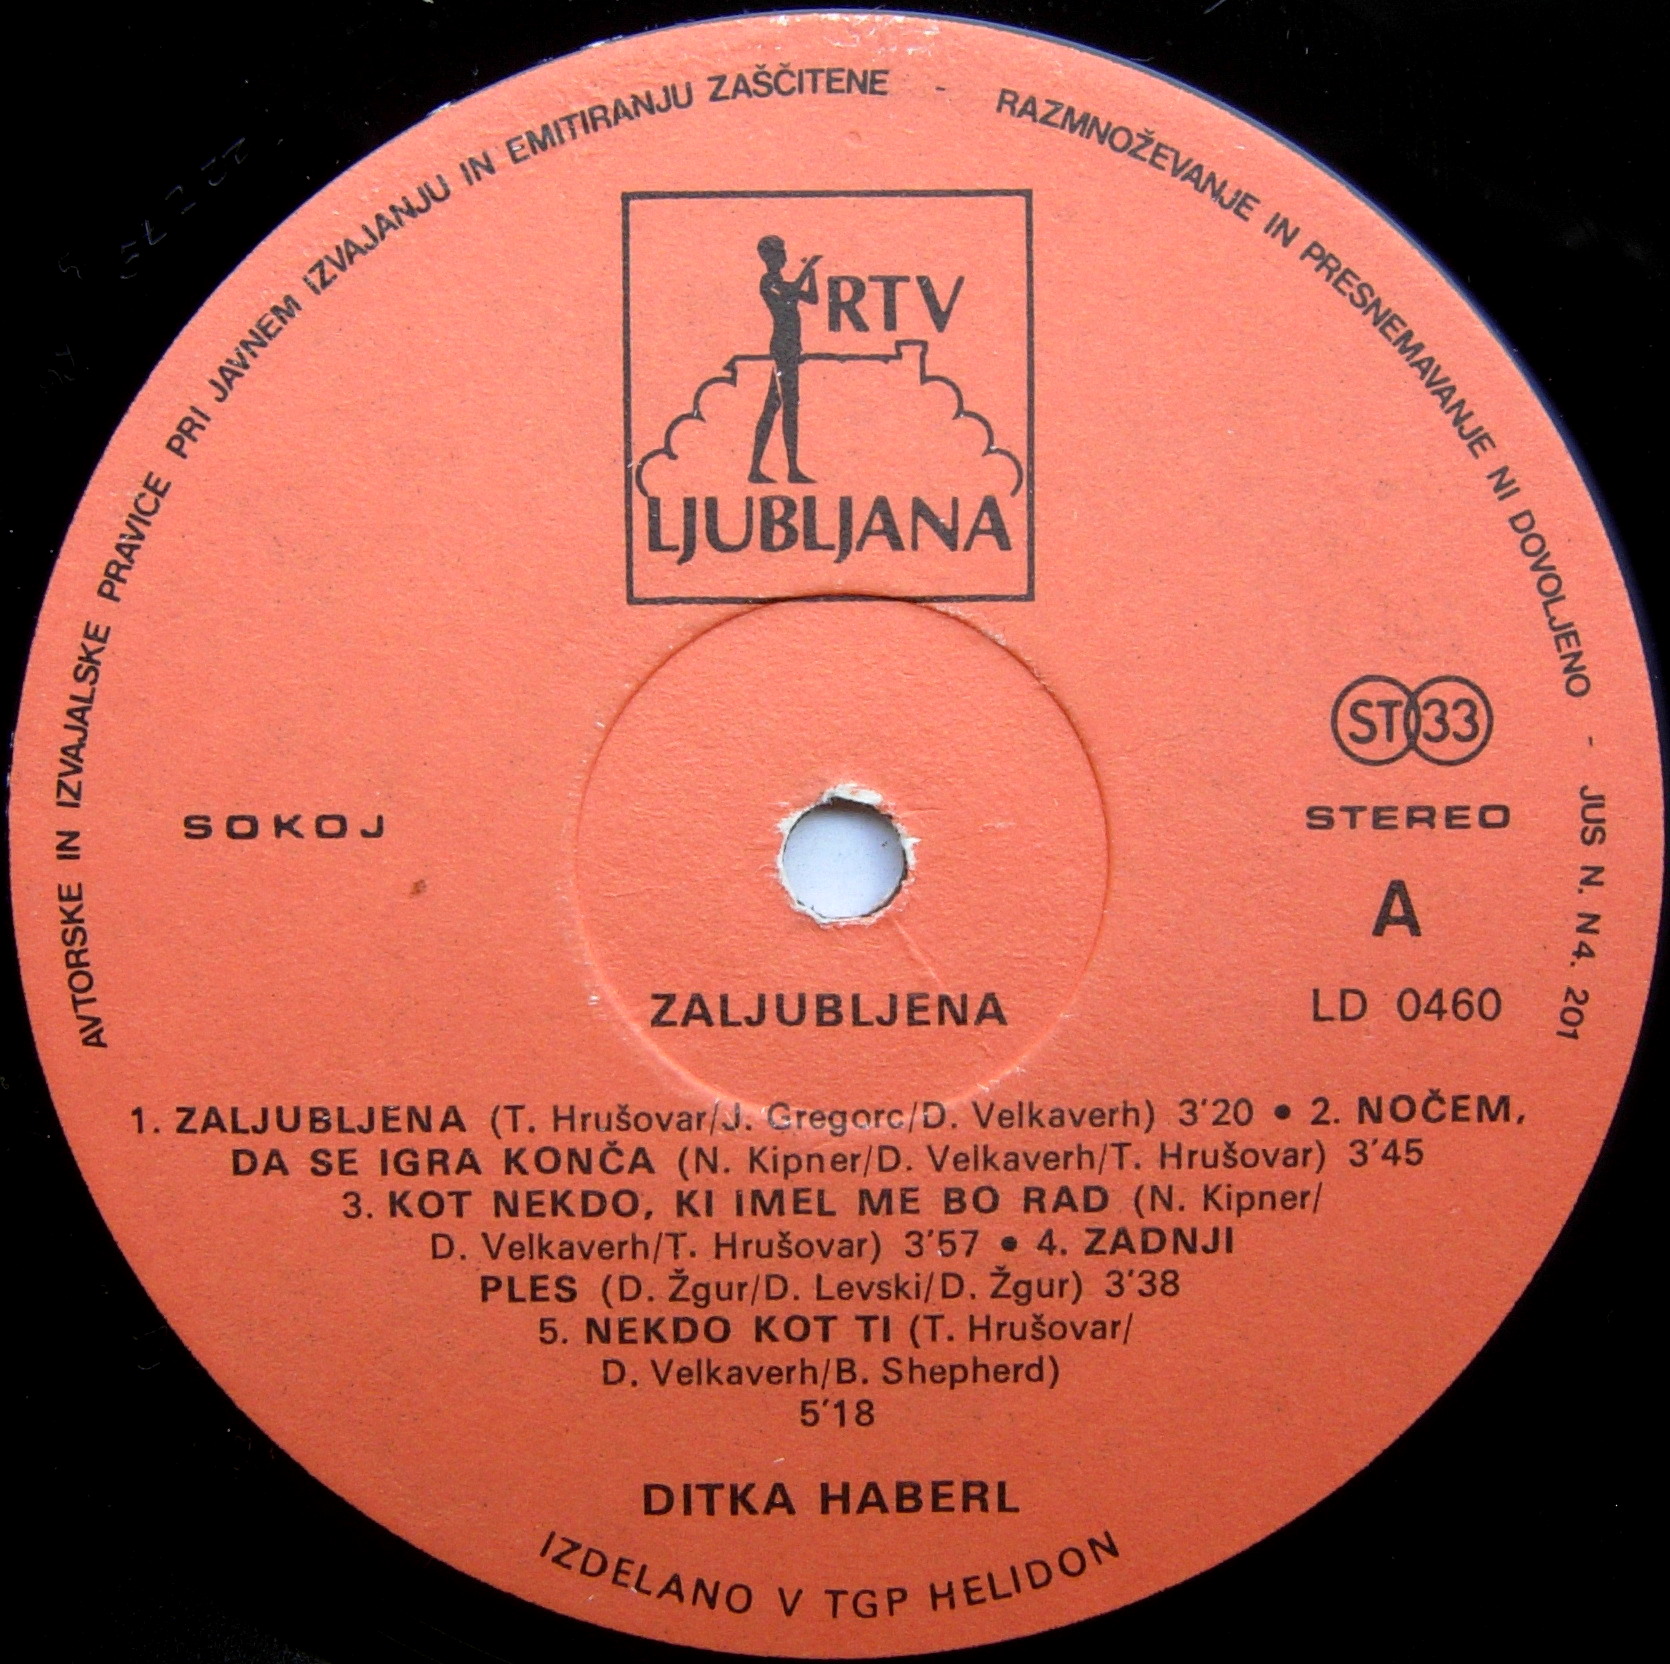 Ditka Haberl Zaljubljena 1979 LP A